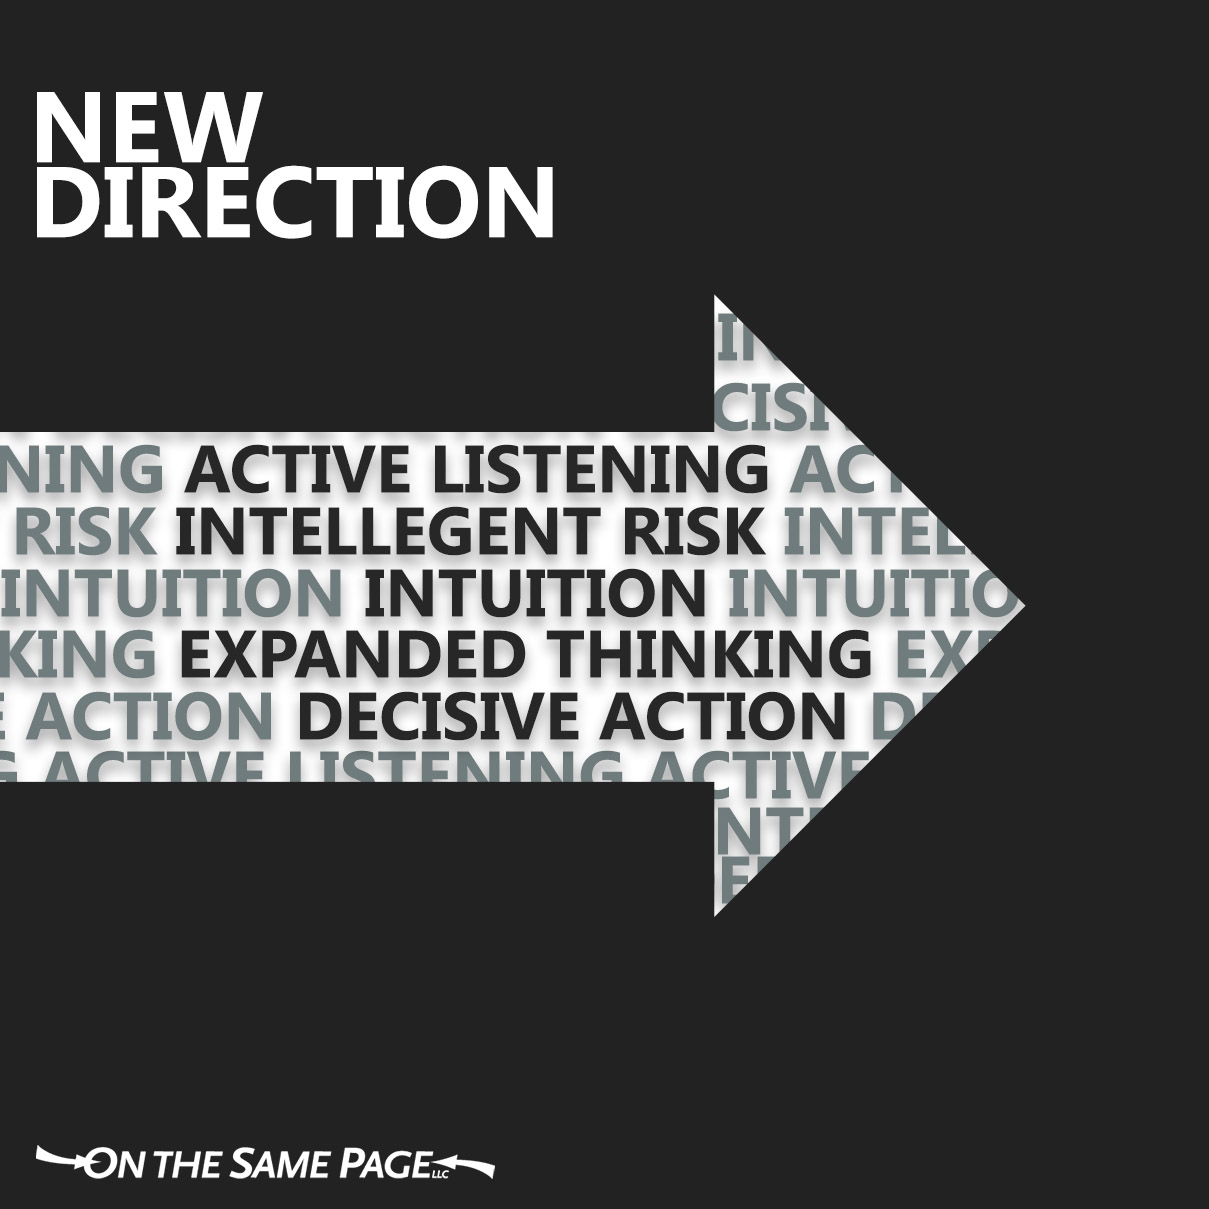 Change Communication - New Direction